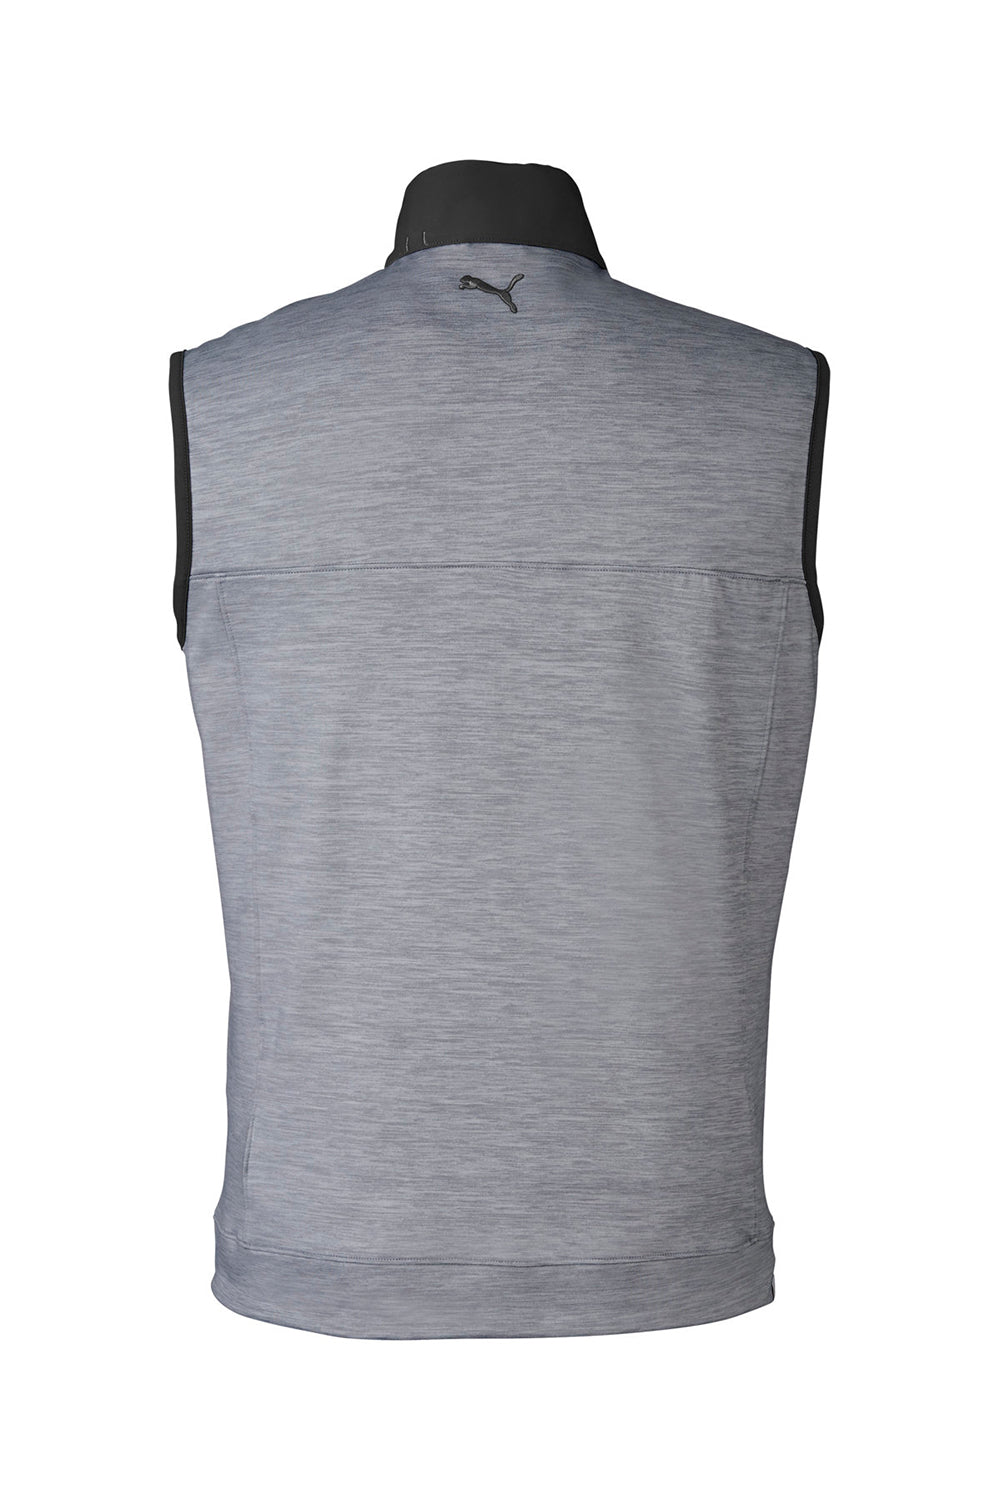 Puma 537465 Mens Cloudspun Colorblock Full Zip Vest Black/Quiet Shade Grey Flat Back